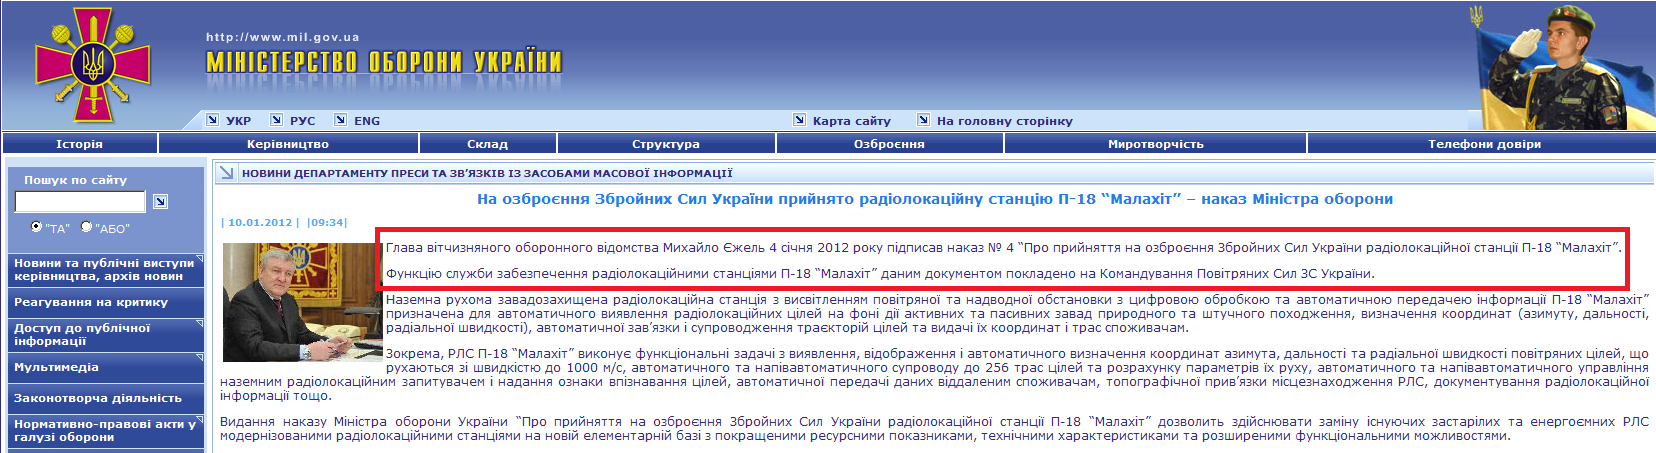 http://www.mil.gov.ua/index.php?lang=ua&part=news&sub=read&id=22943